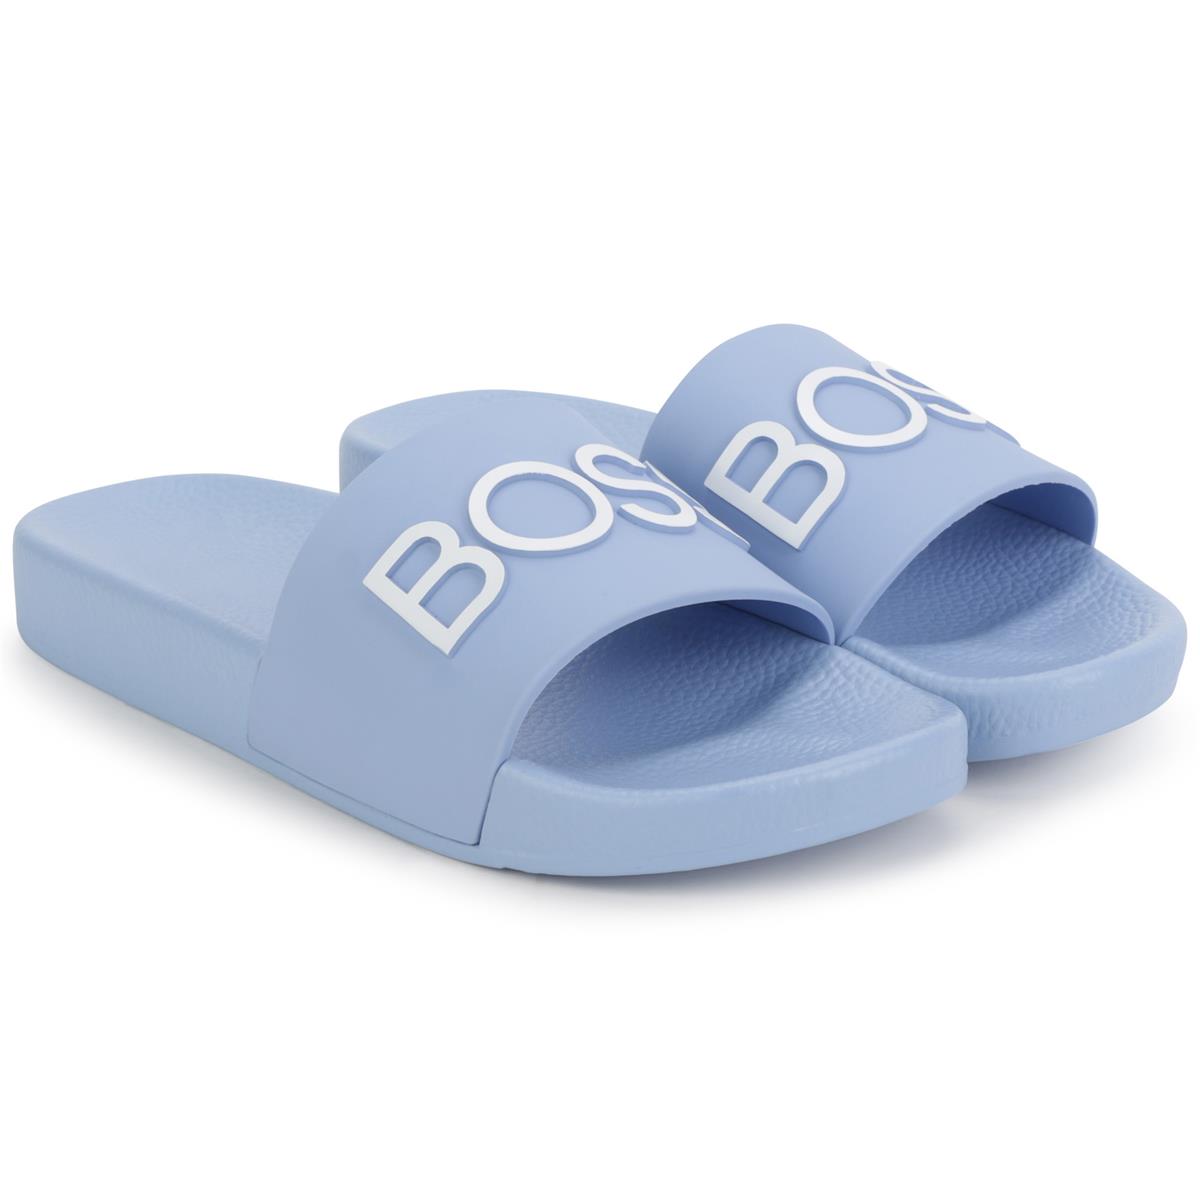 Boys Blue Logo Sandals